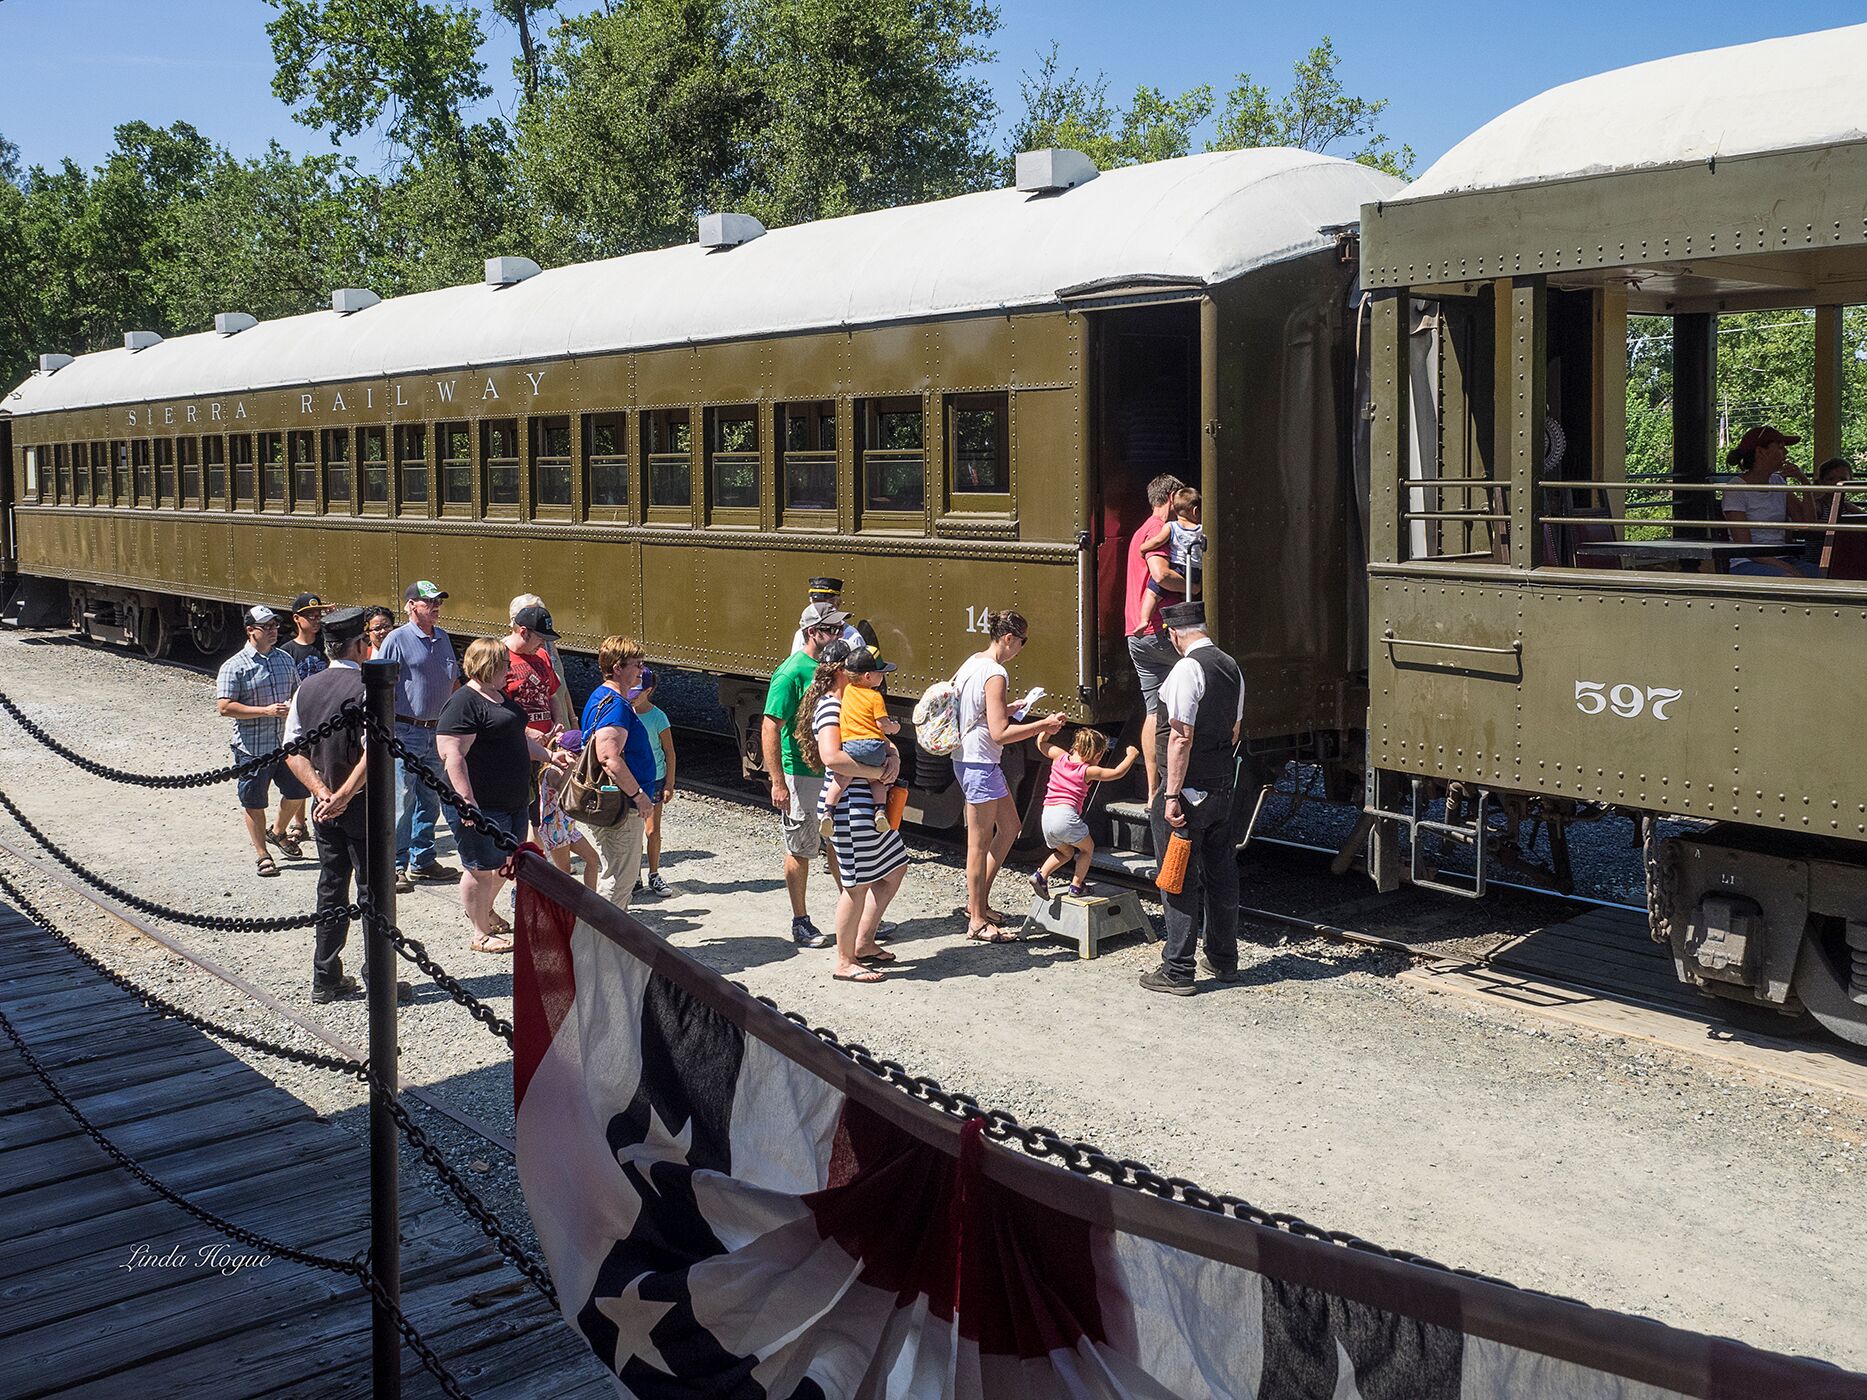 Opening Weekend of Excursion Train Ride Season!